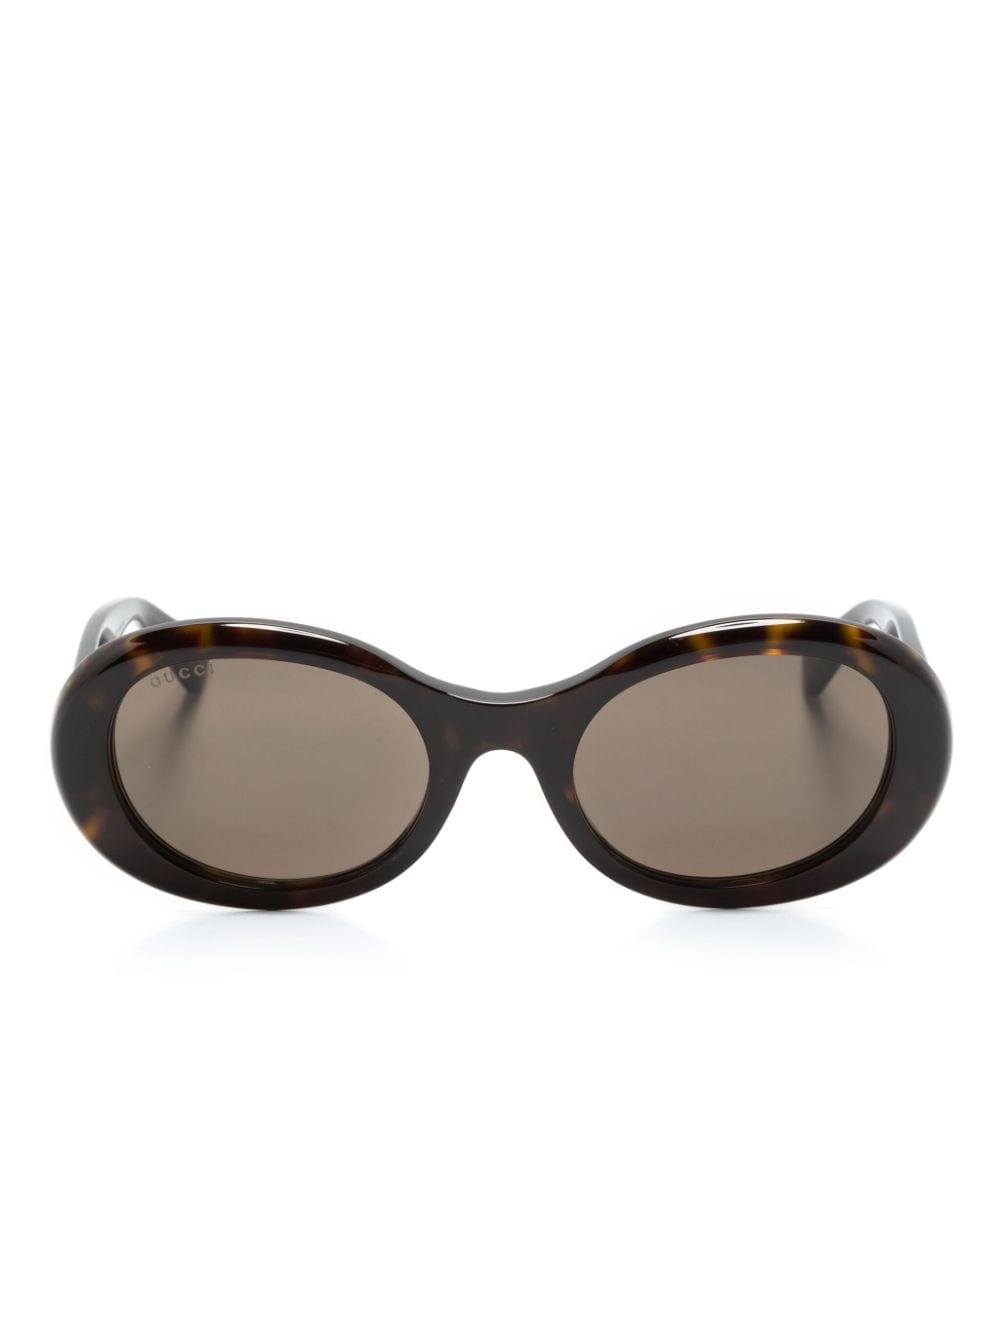 Gucci Tortoiseshell Oval-frame Sunglasses In Brown